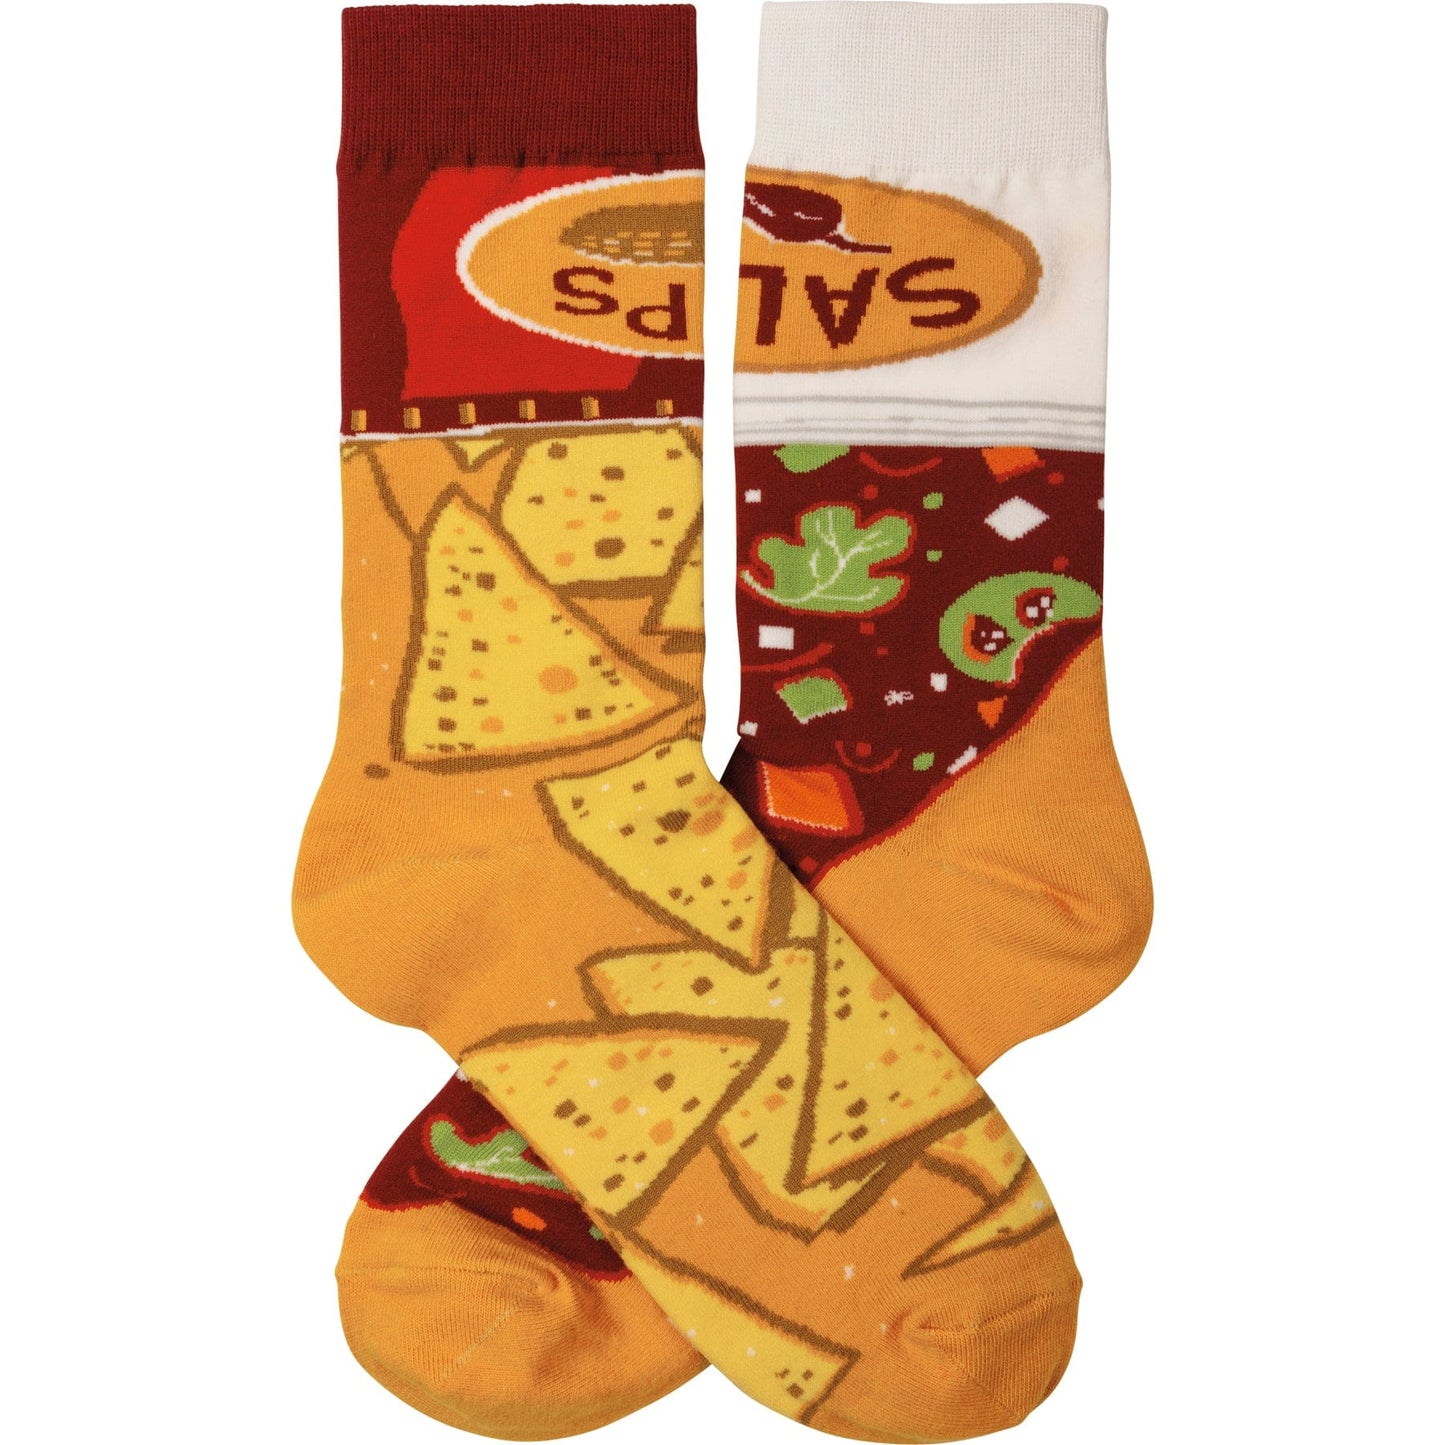 Socks One Size Fits Most Socks - Chips & Salsa PBK-108531